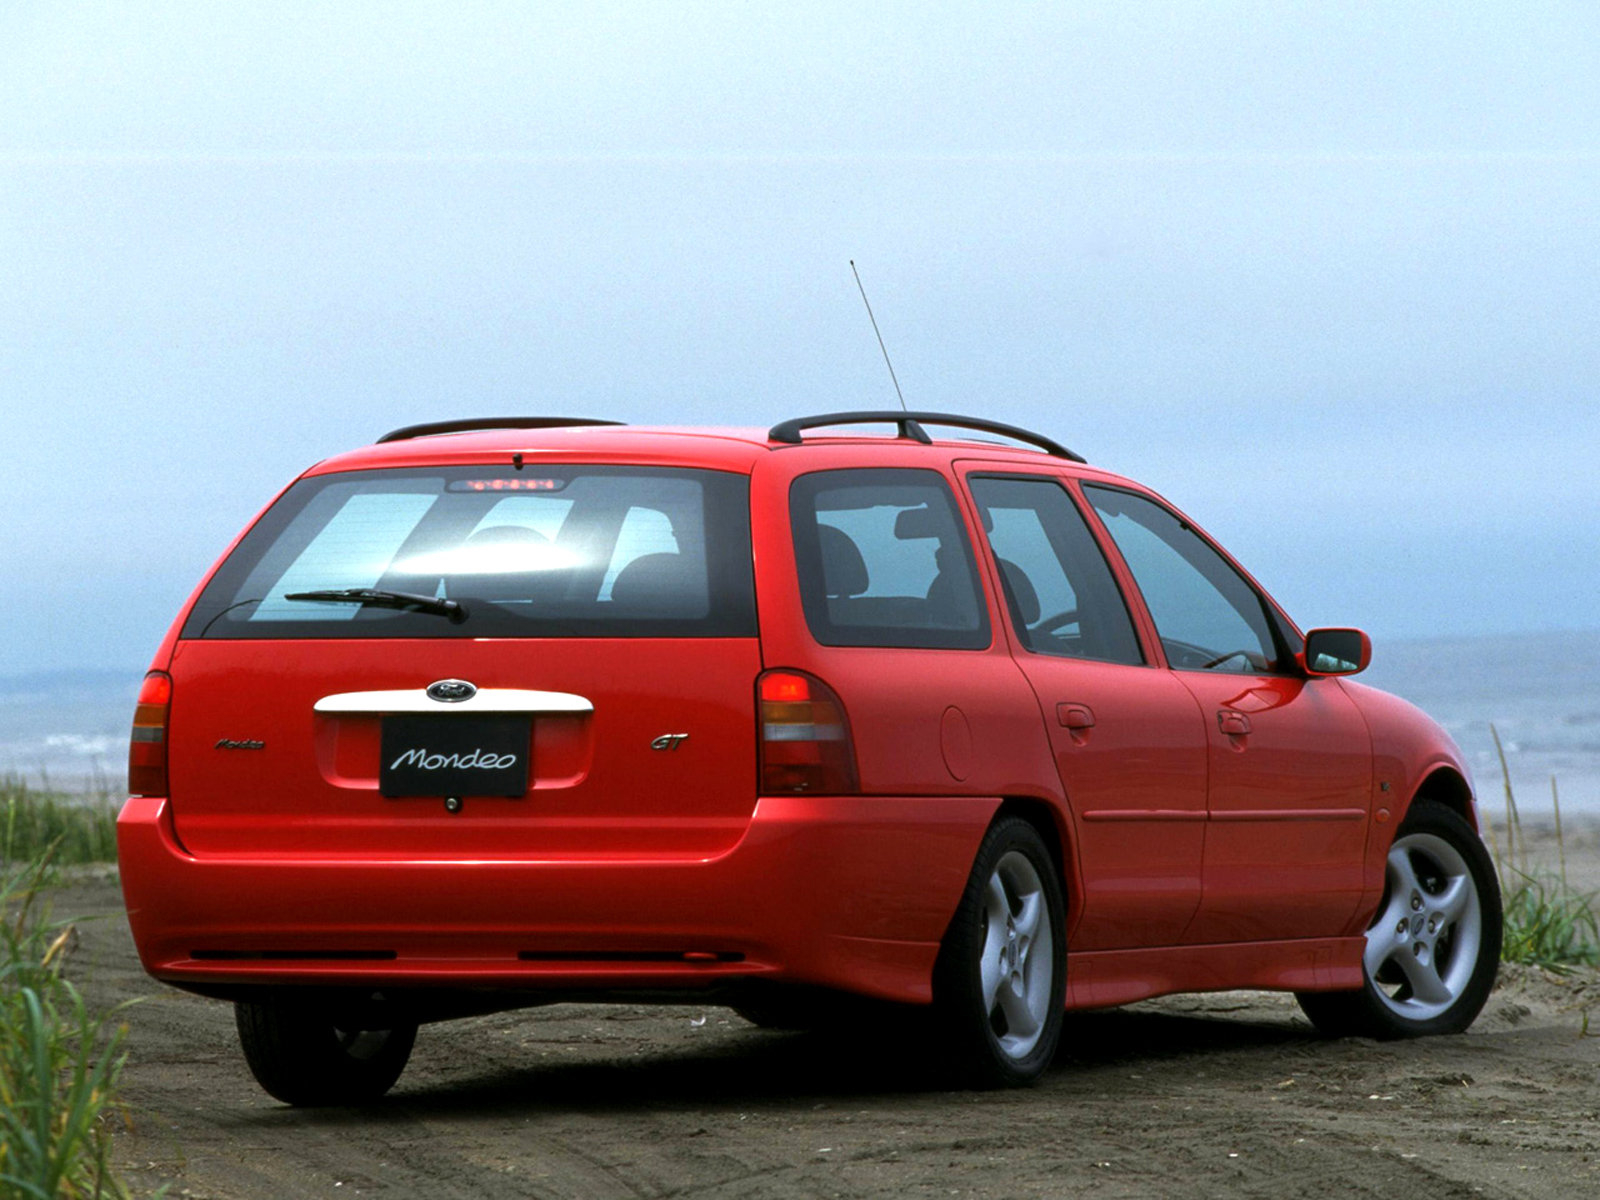 Кузов универсал 5. Ford Mondeo 1996 универсал. Ford Mondeo 2 универсал. Форд Мондео 2 универсал. Форд Мондео 1 универсал.